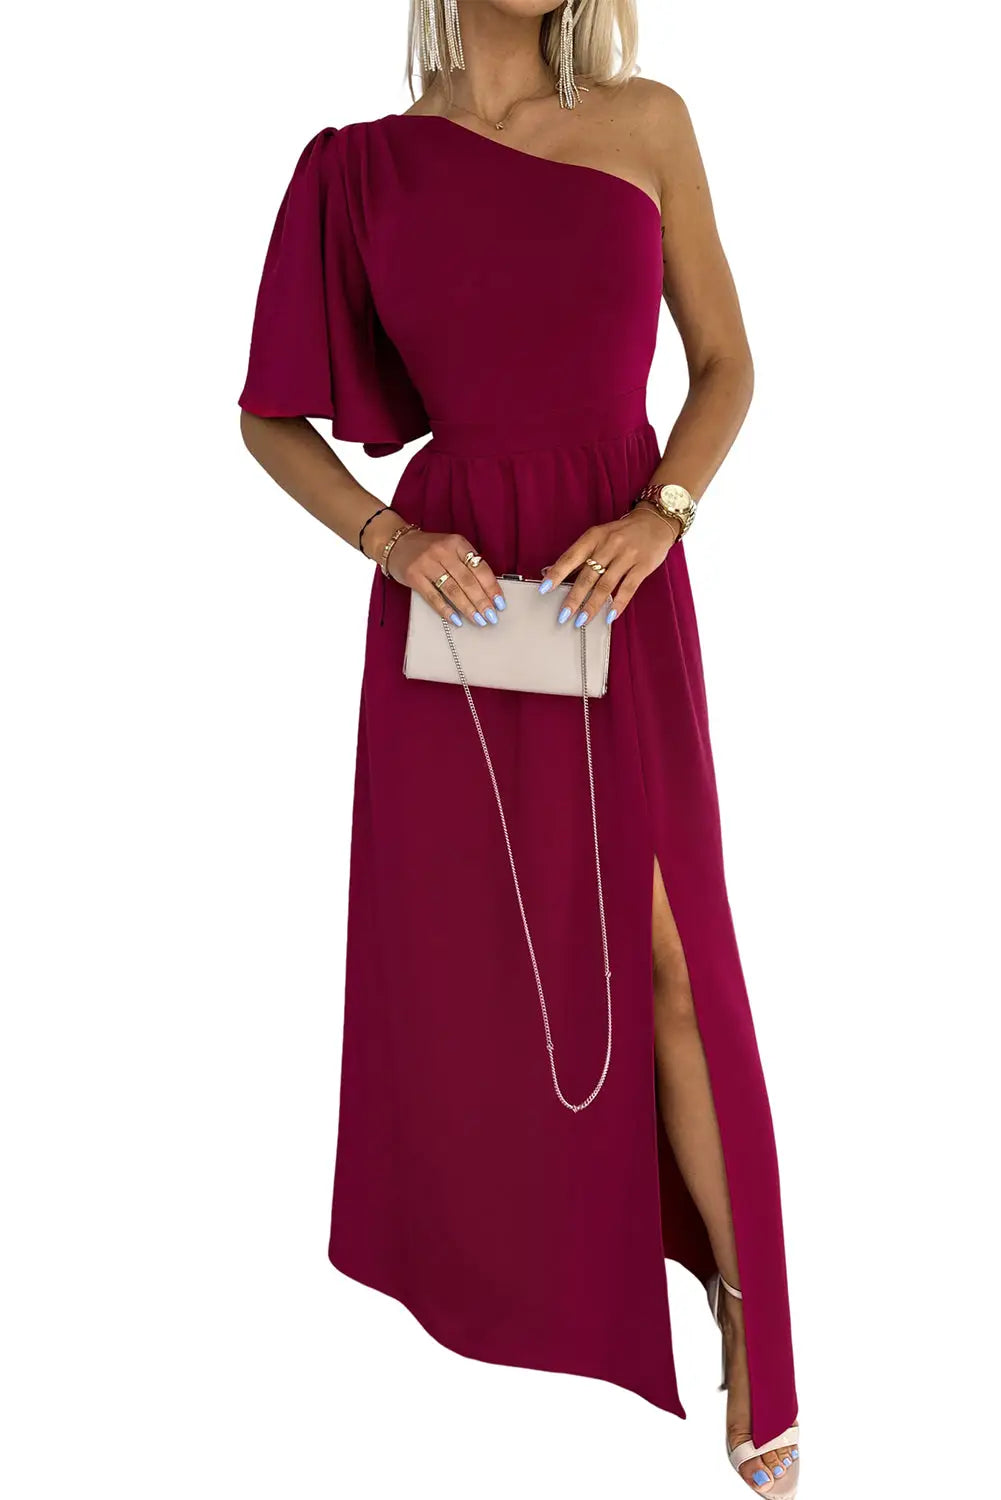 Rose one shoulder ruffle sleeve maxi dress with slit - evening dresses